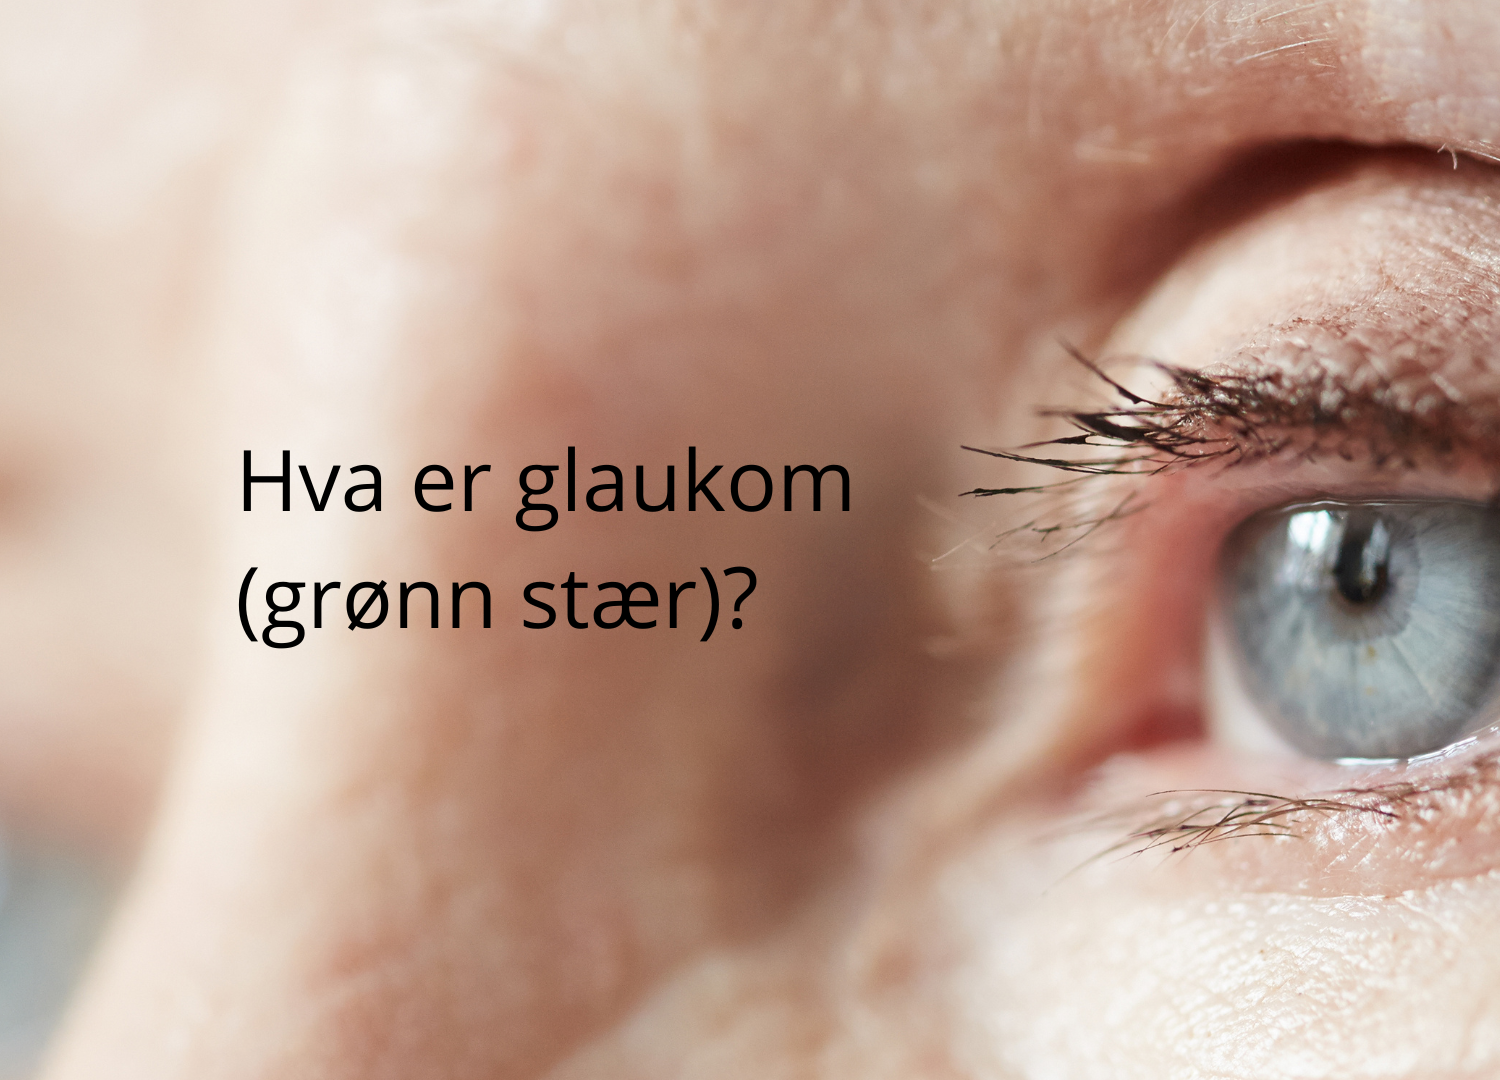 Hva er glaukom?